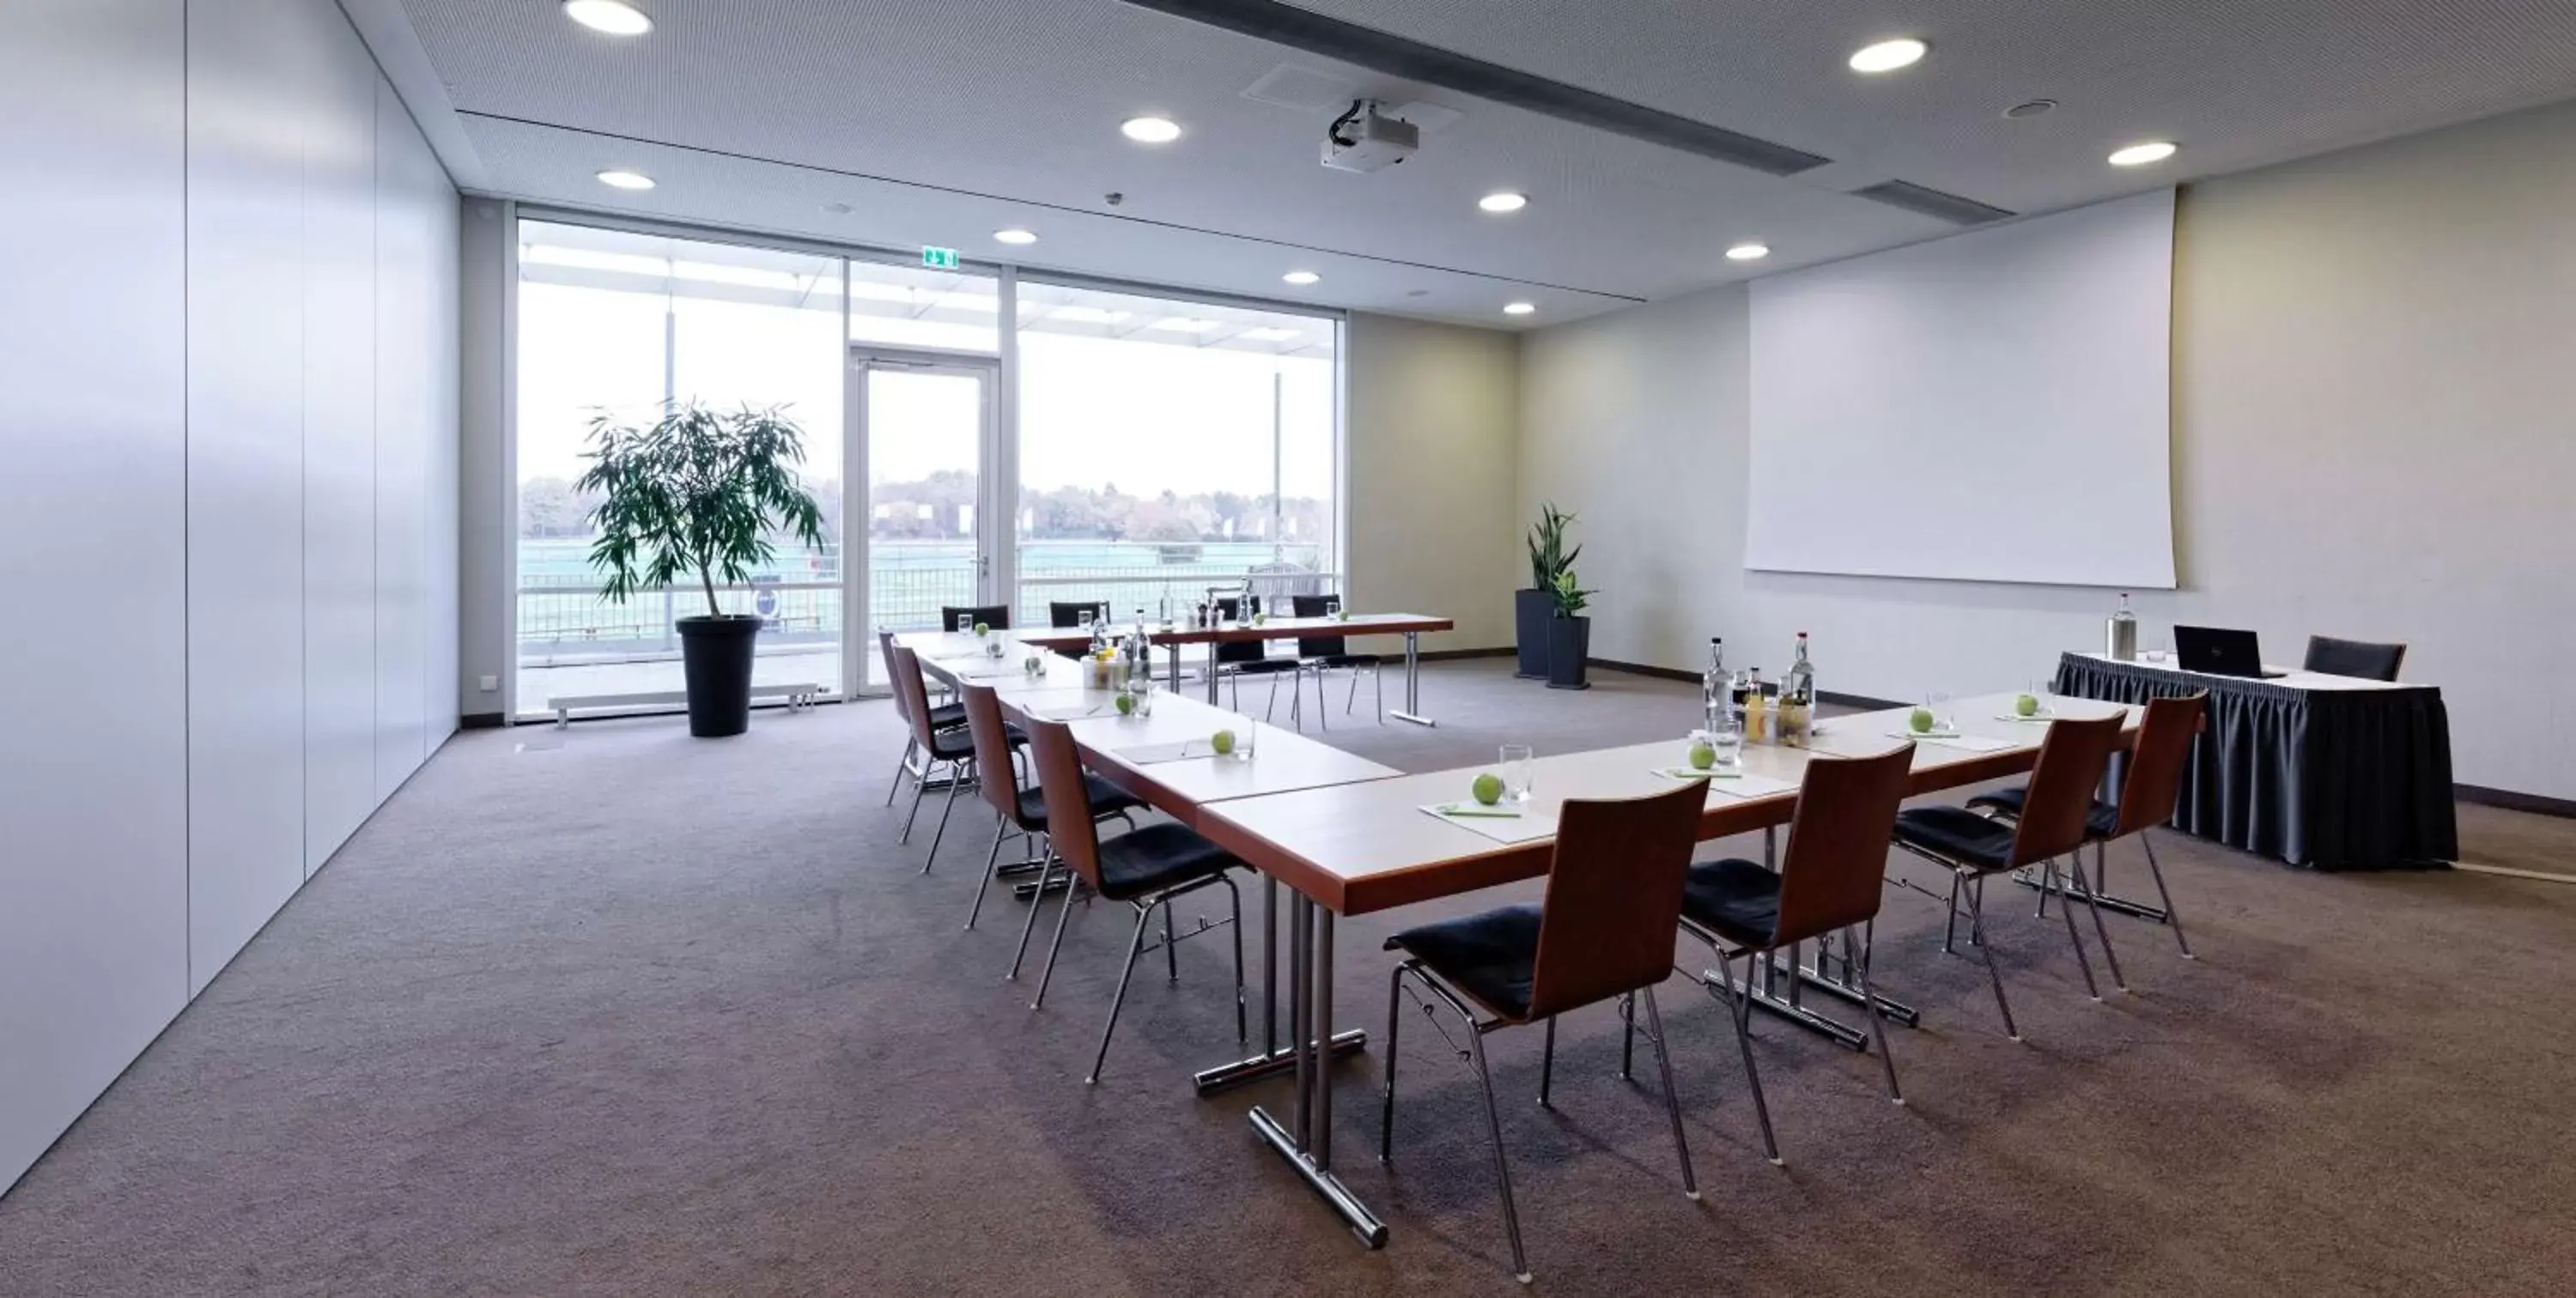 Meeting/conference room in Atlantic Hotel Galopprennbahn